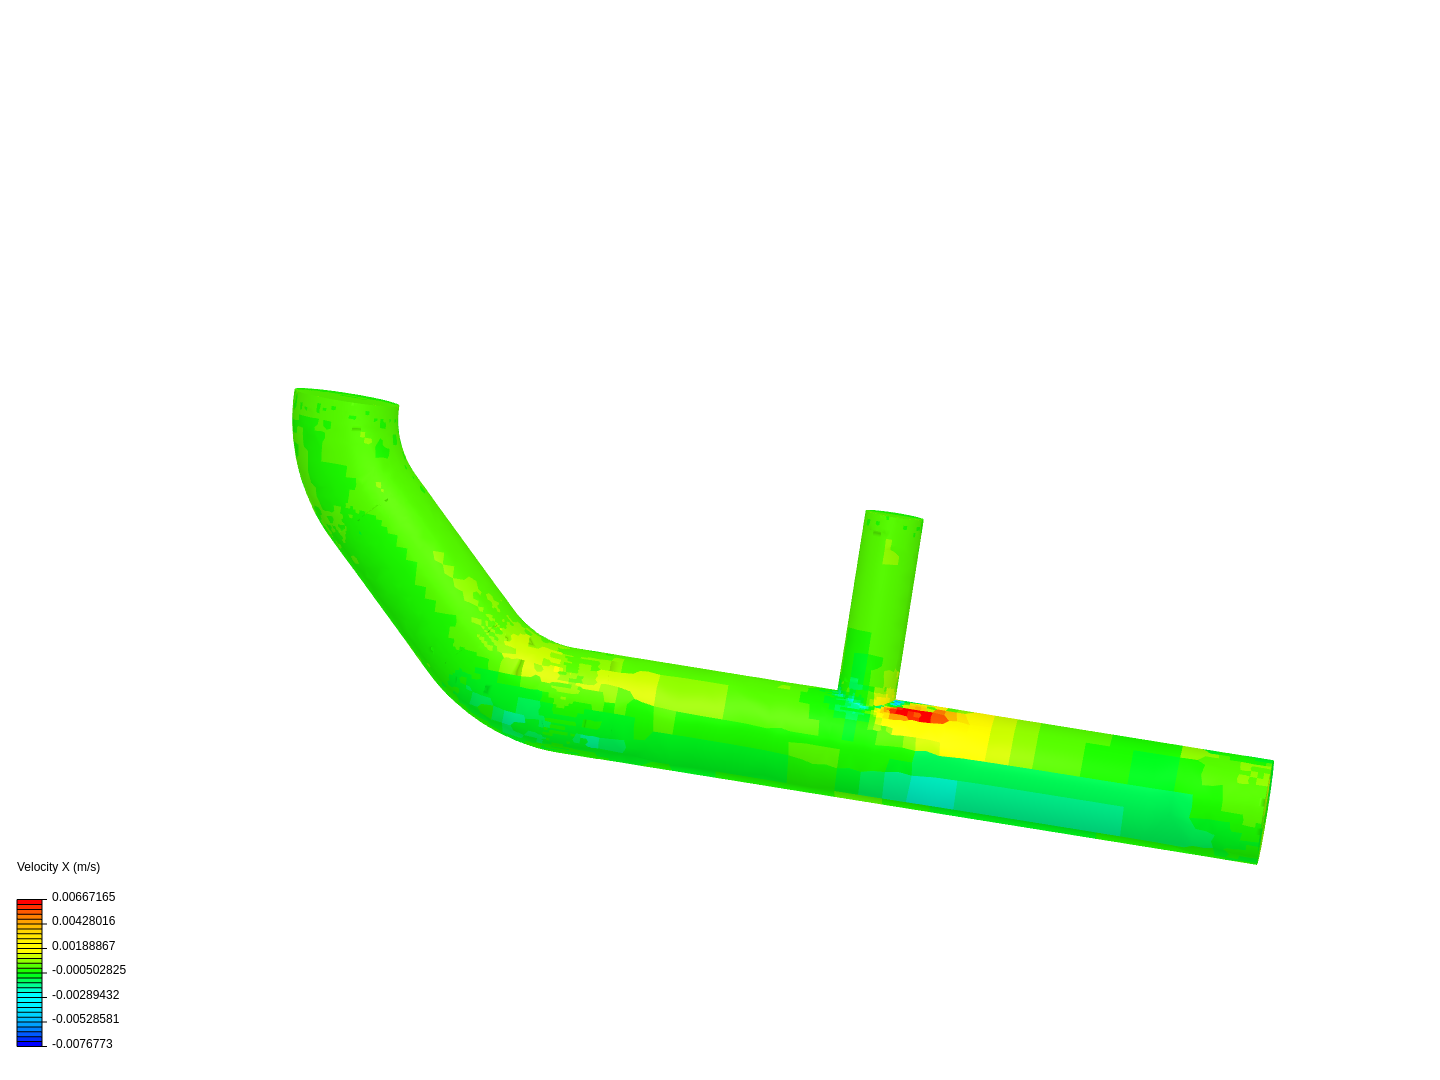 Laminar flow through a pipe image